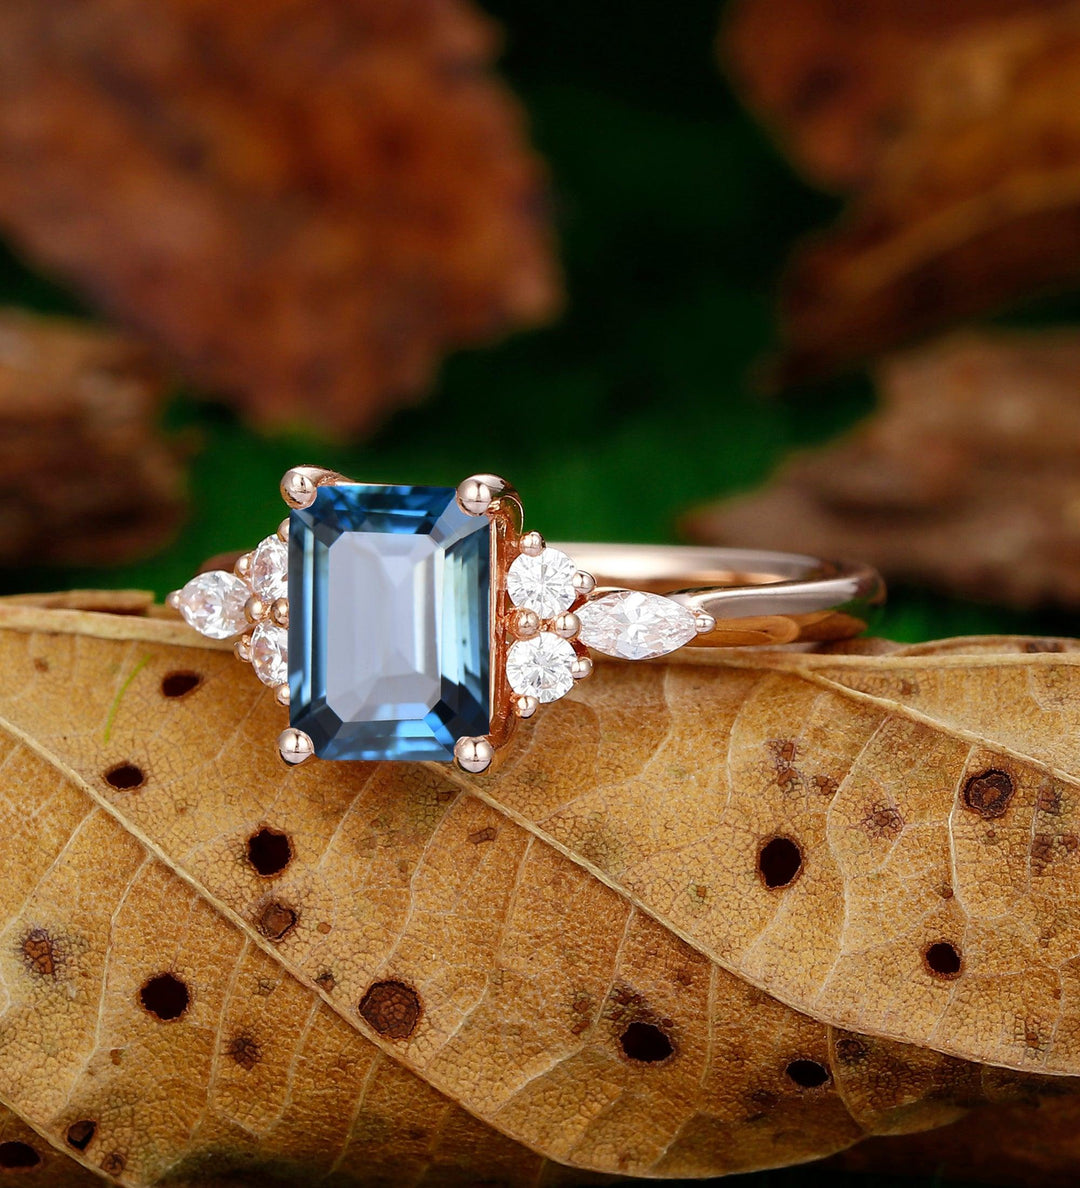 Vintage Emerald Cut Natural London Blue Topaz 14k Rose Gold Nature Inspired Enagement Ring - Esdomera